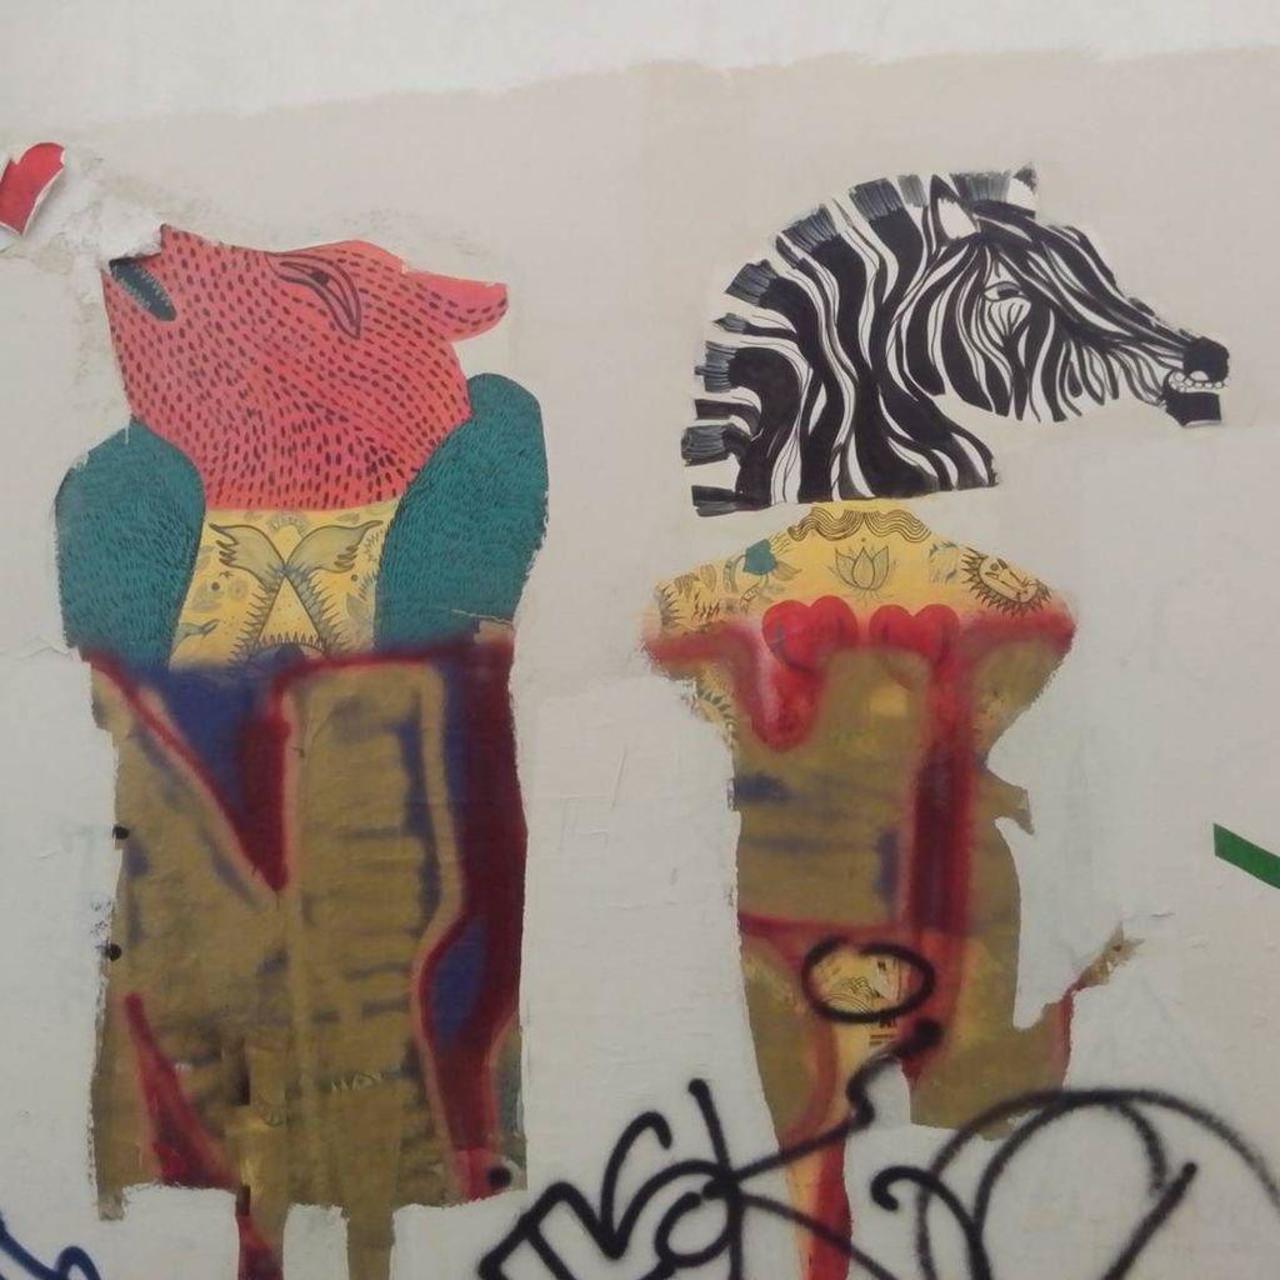 RT @StArtEverywhere: #streetart #streetarteverywhere #streetshot #graffitiart #graffiti #arturbain #urbanart  #mur #mural #wall #wallart… http://t.co/7BlyvuOiOQ